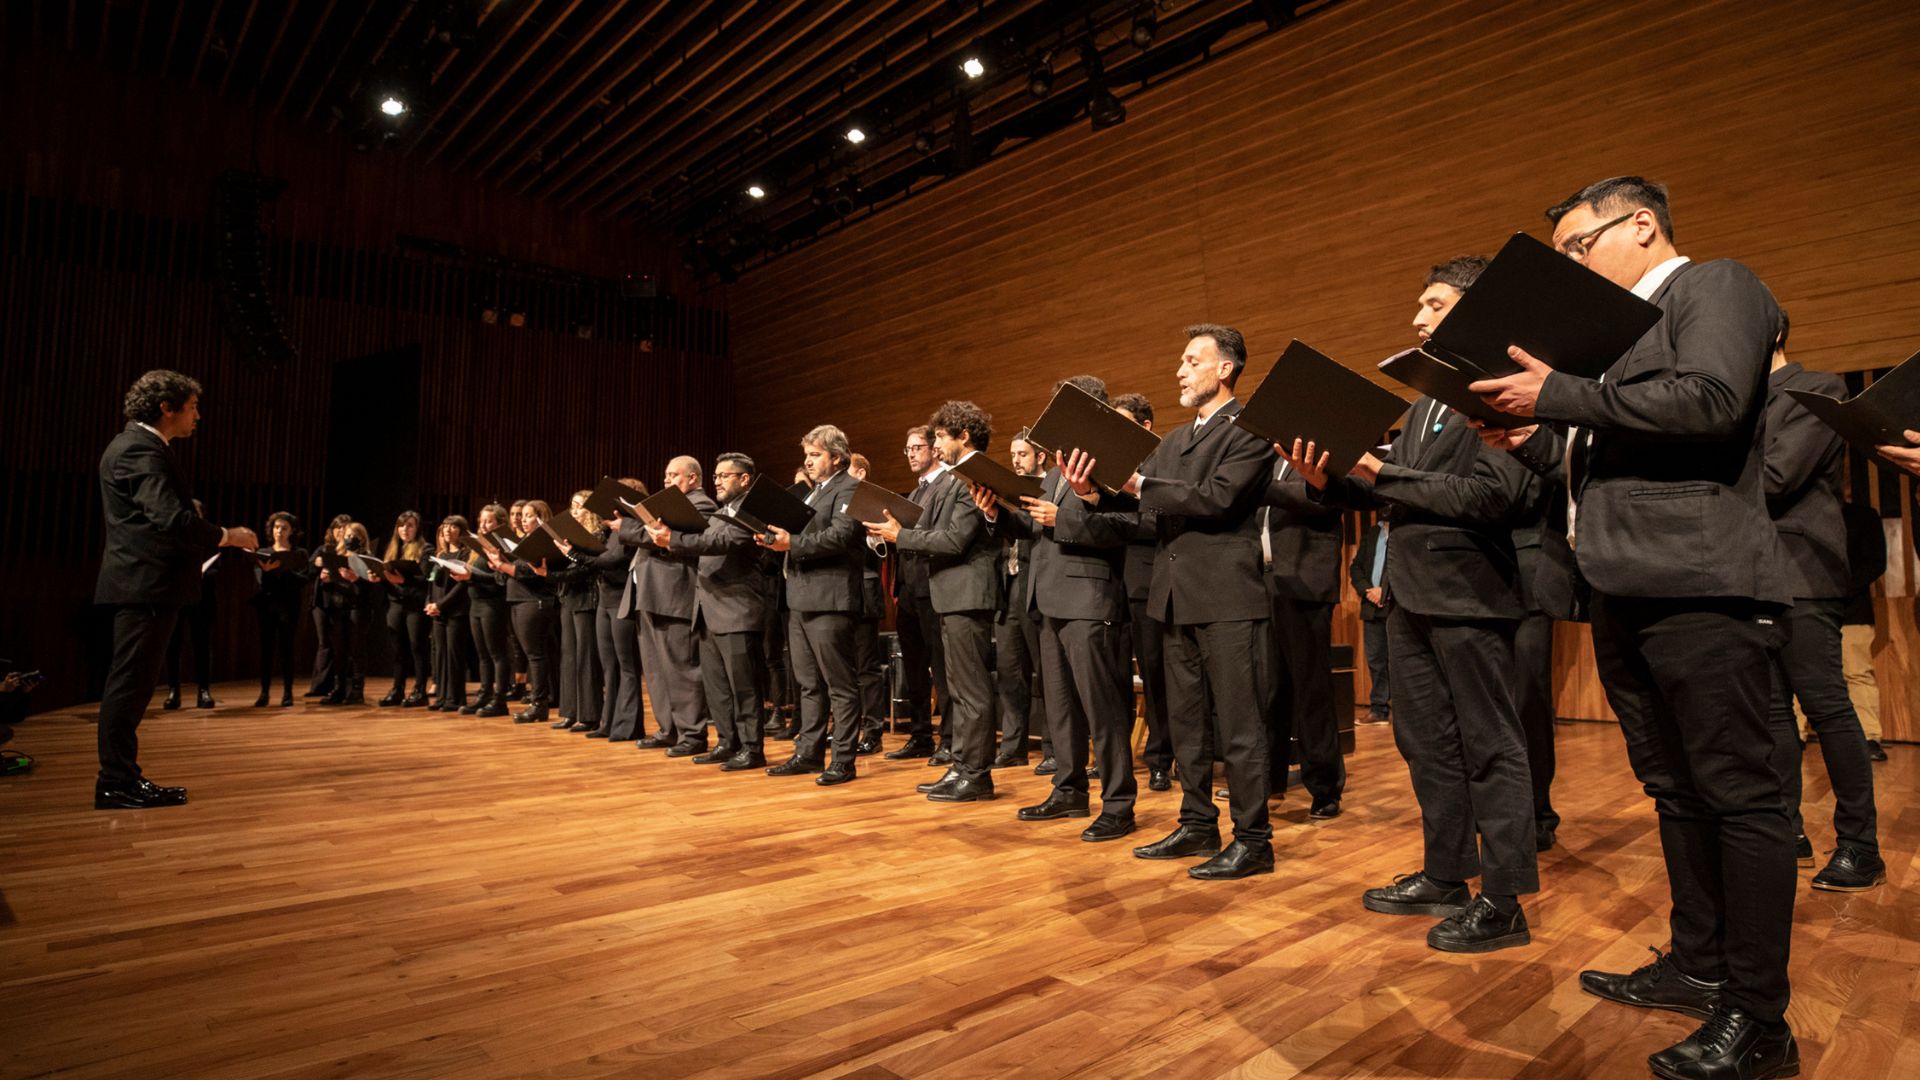 Convocatoria abierta para integrar el Coro Nacional de Música Argentina